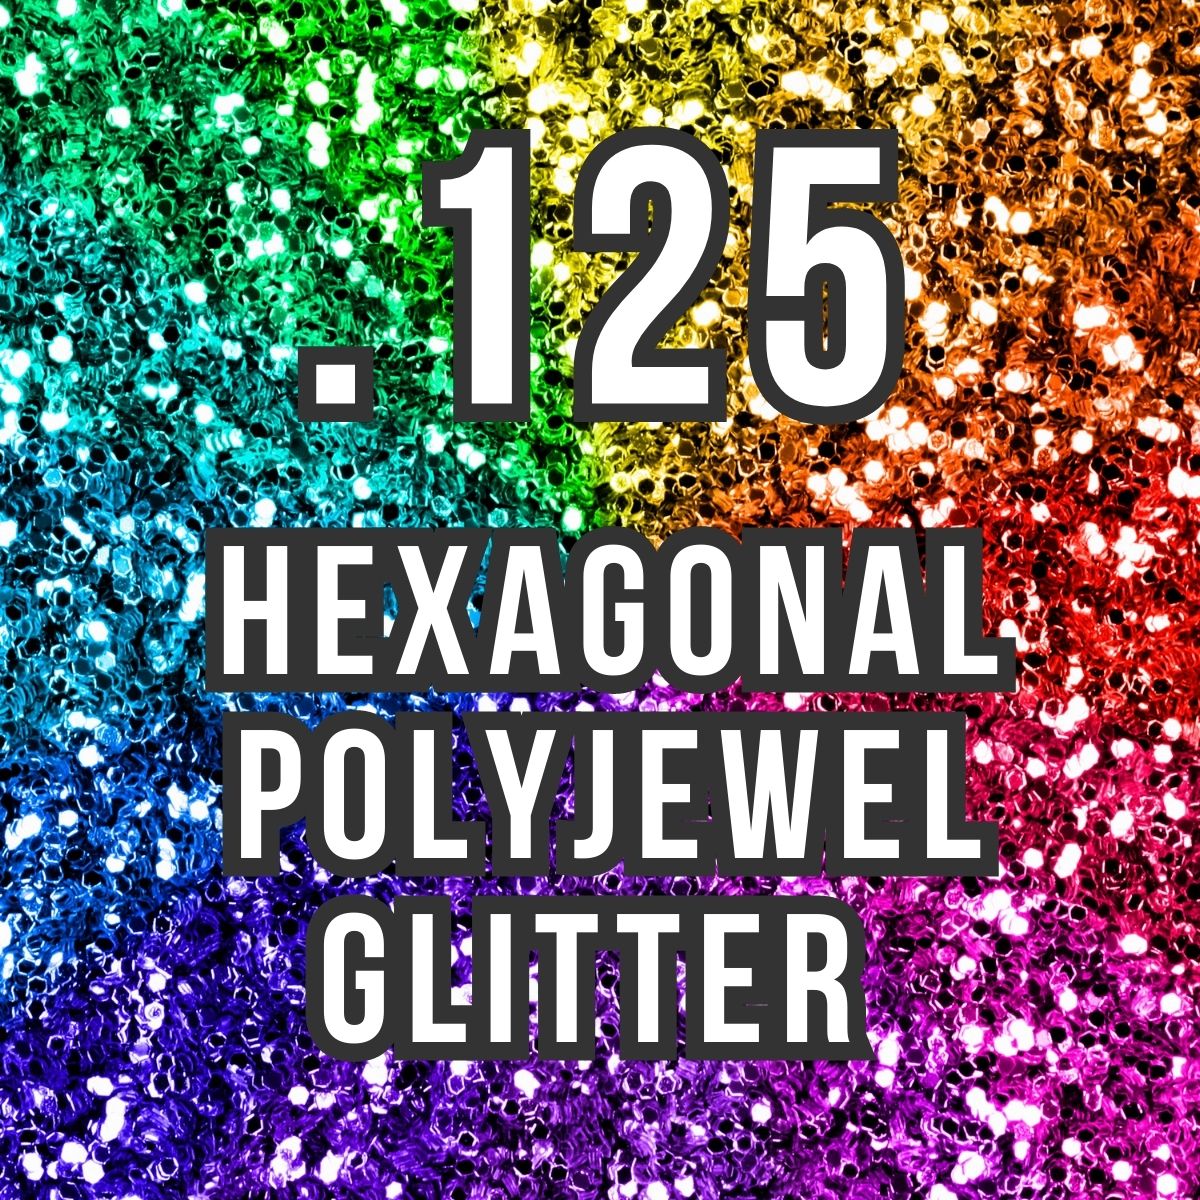 .125 Hexagonal Polyjewel Glitter (Large)